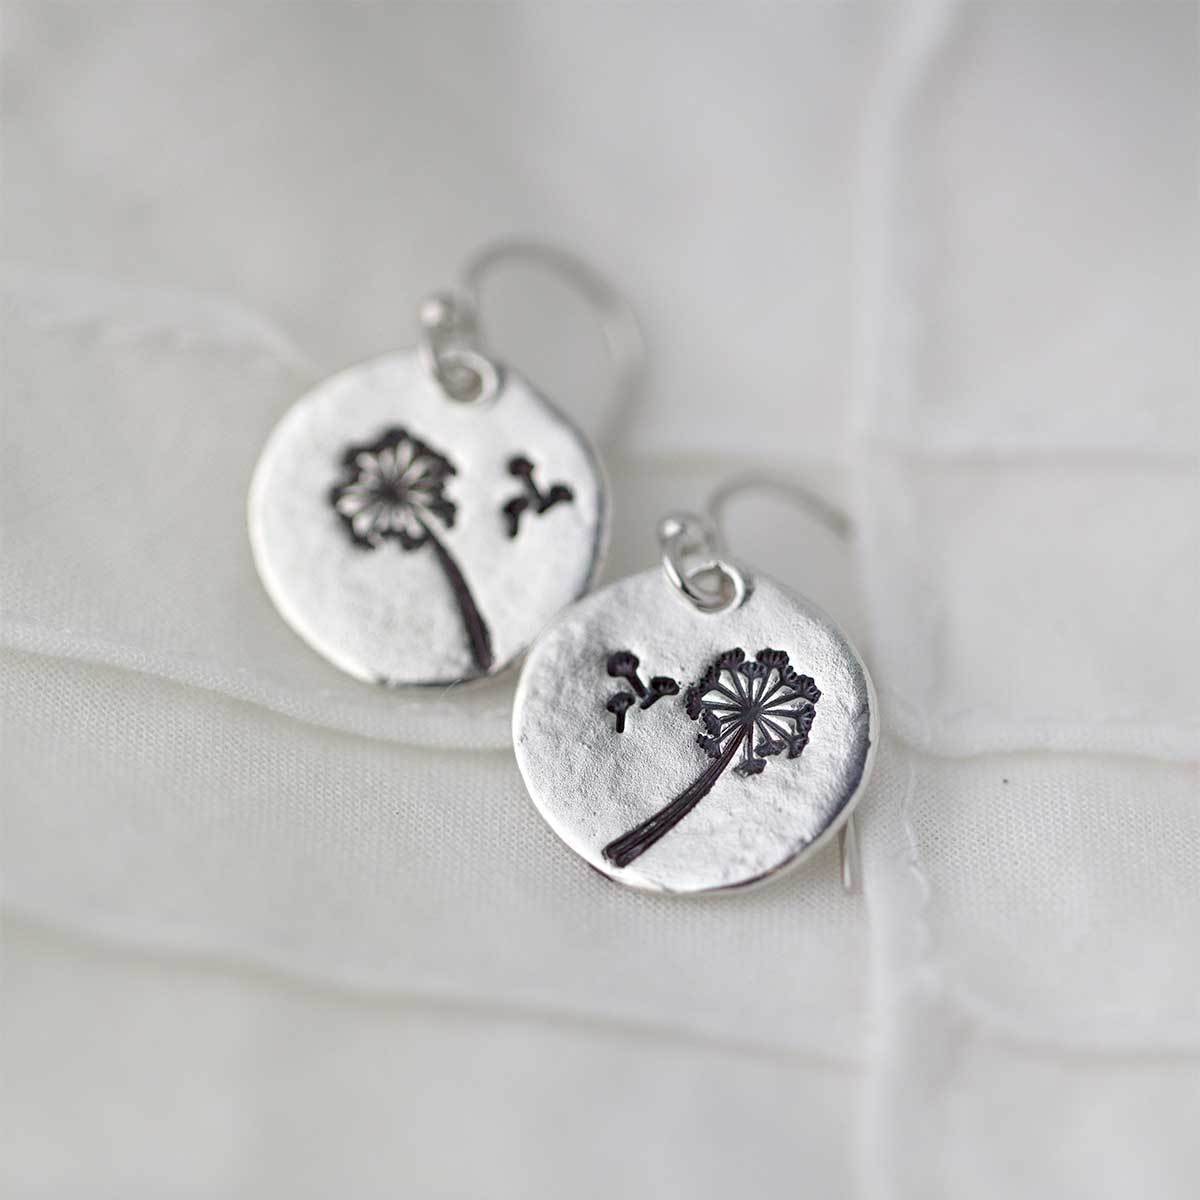 Dandelion Wish Earrings - Handmade Jewelry by Burnish